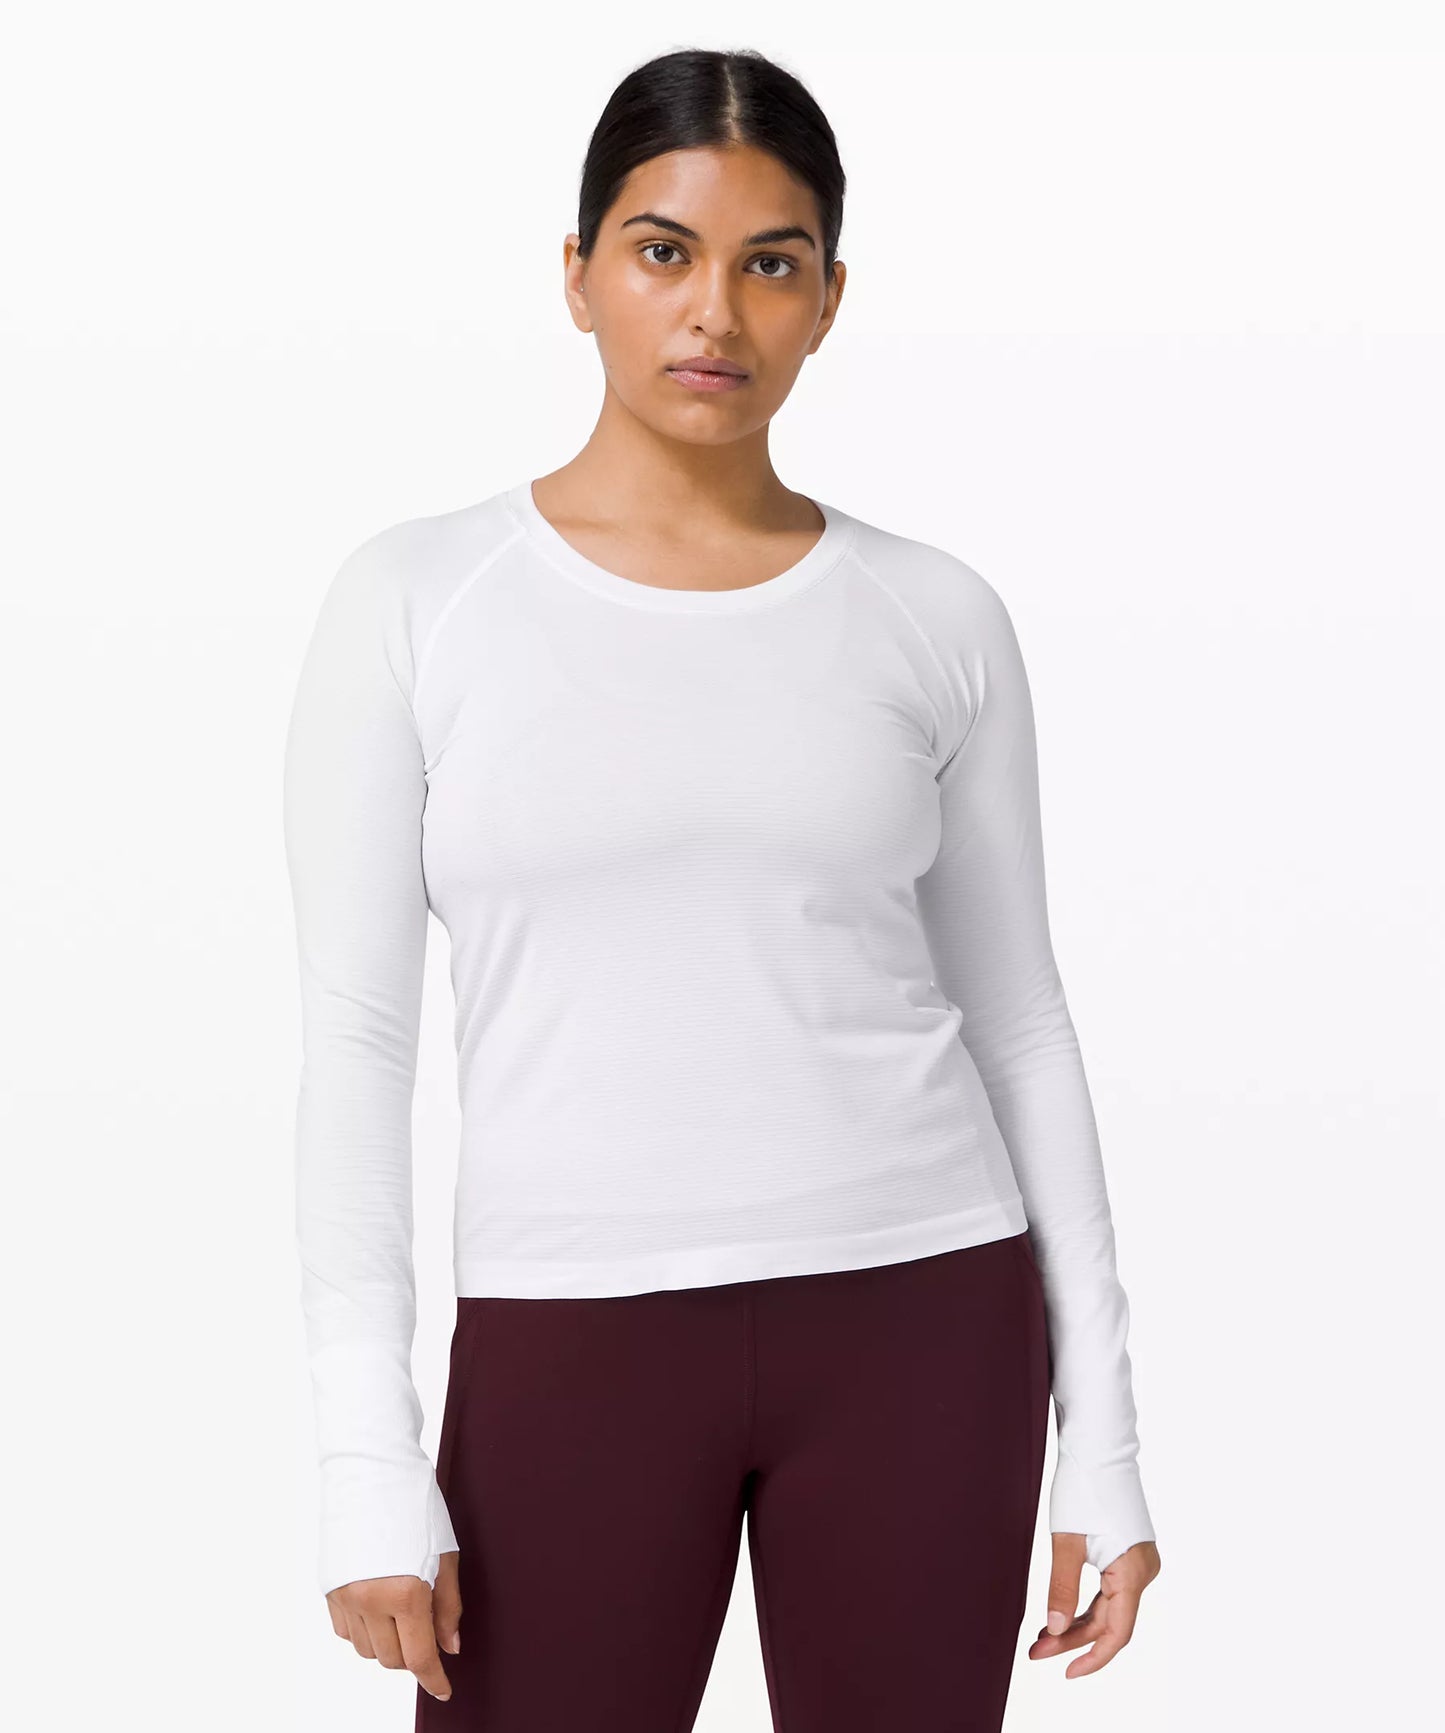 Lululemon Swiftly Tech Short Sleeve Shirt 2.0 *Race Length - White